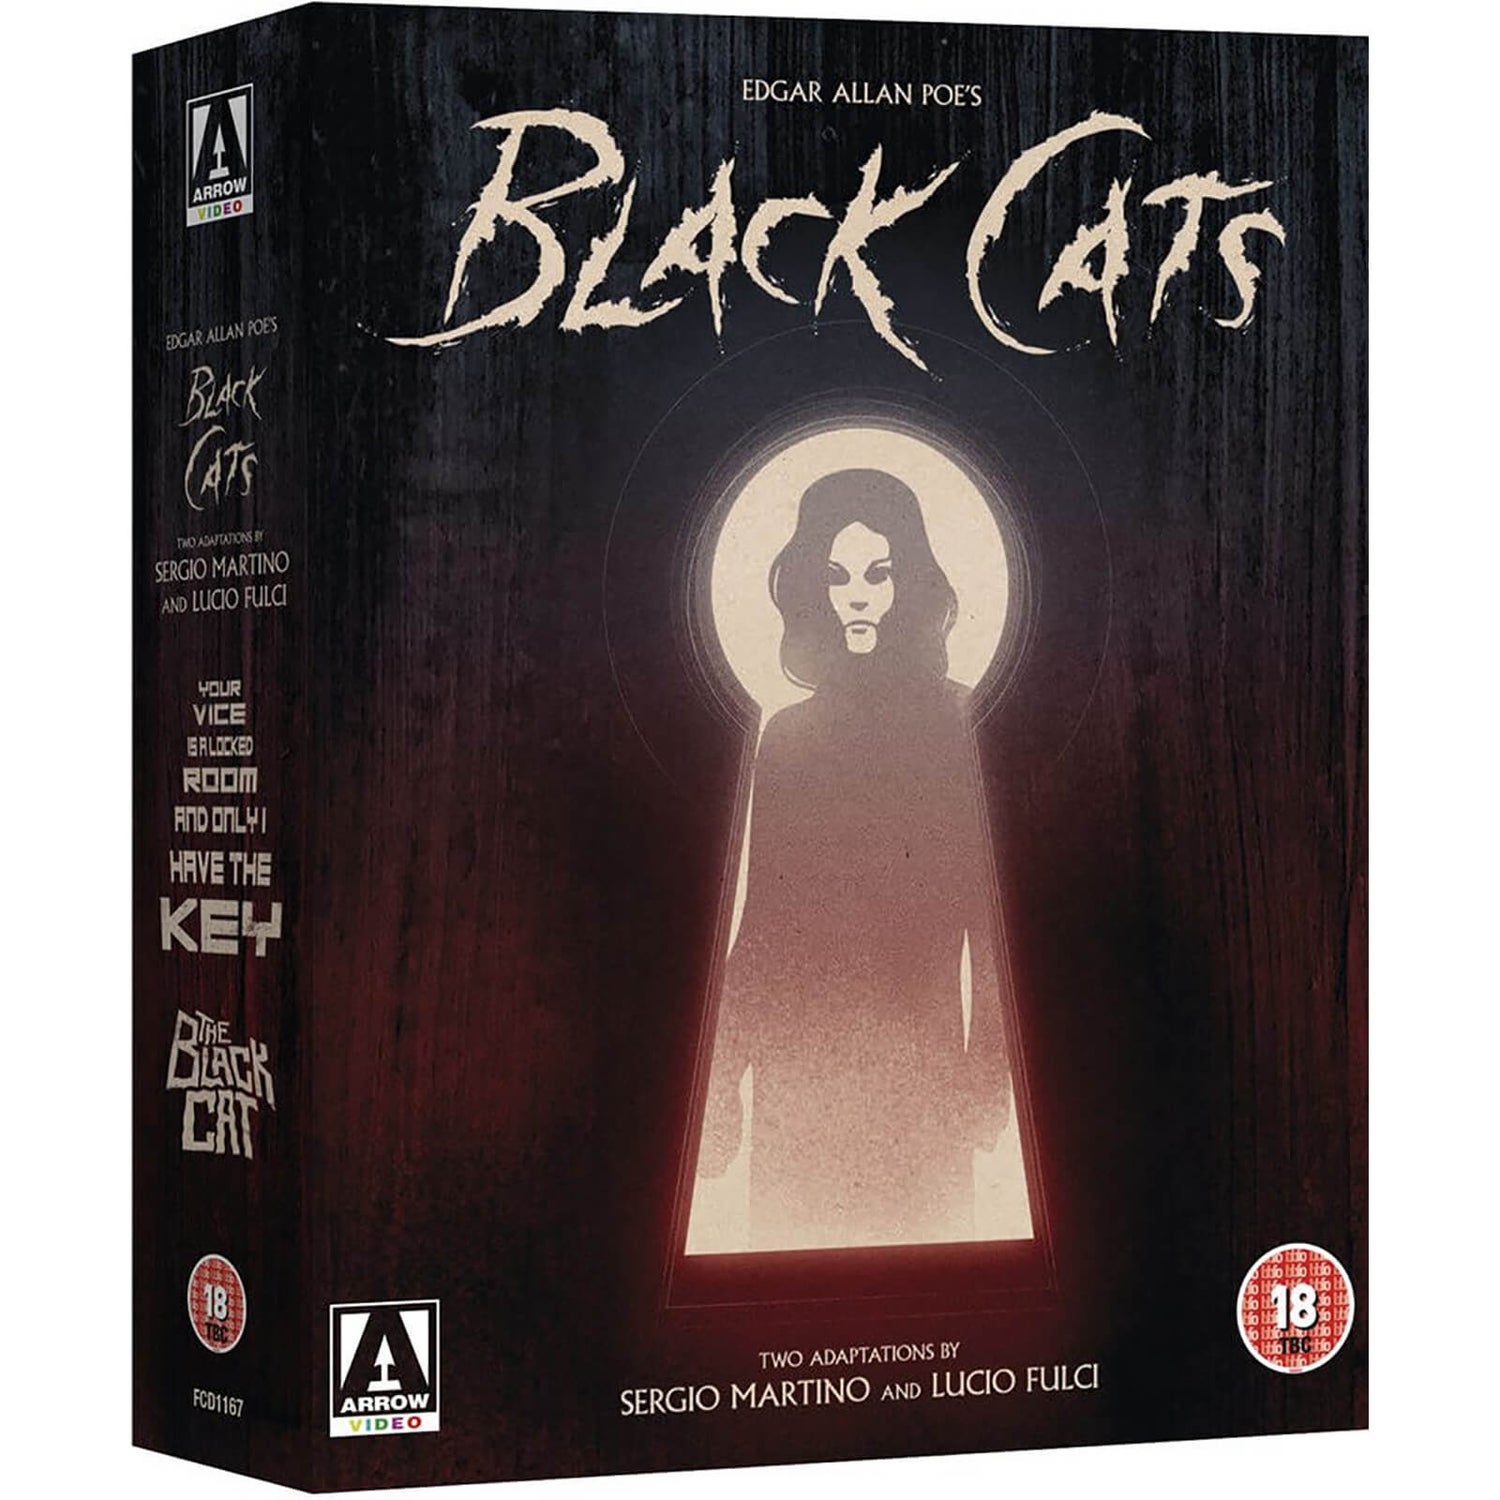 Edgar Allan Poe's Black Cats - Dual Format (Includes DVD)